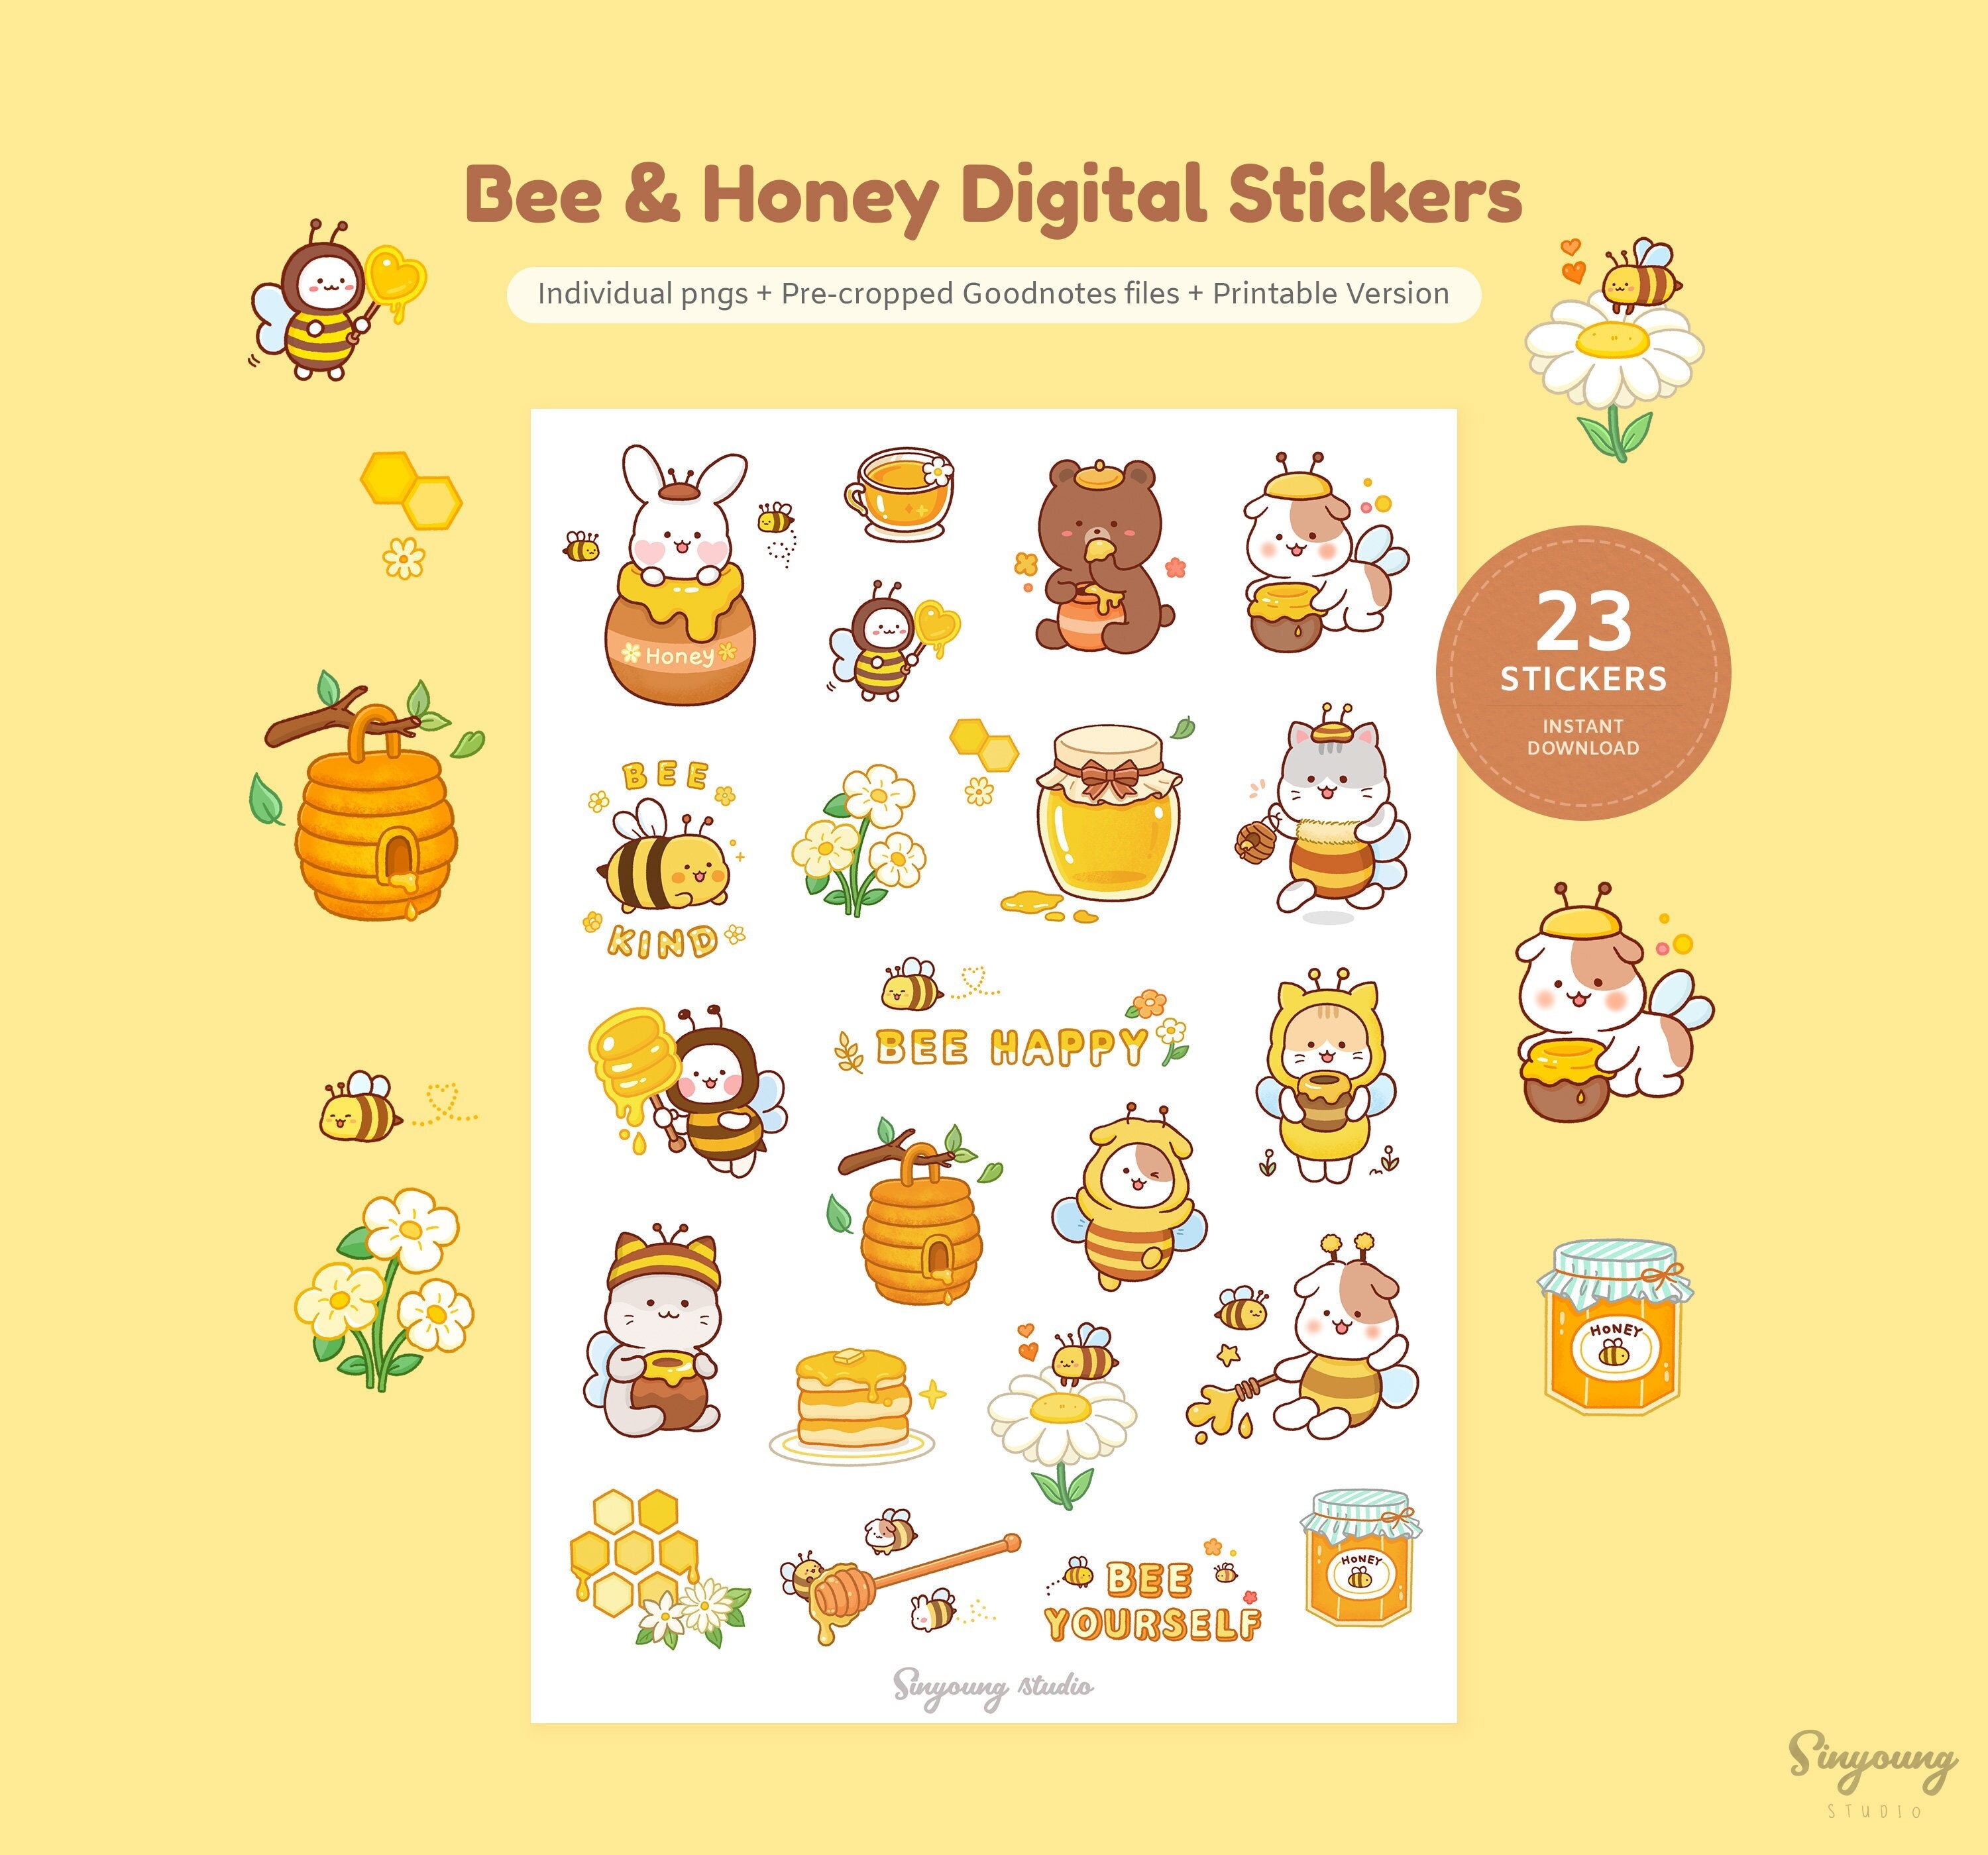 Kawaii Kpop Toploader Deco Stickers, Pixel Bunny Stickers, Tulip Honey Bee  Stickers, Heart Lock Key Stickers, Picnic Tea Time Sticker Sheet 